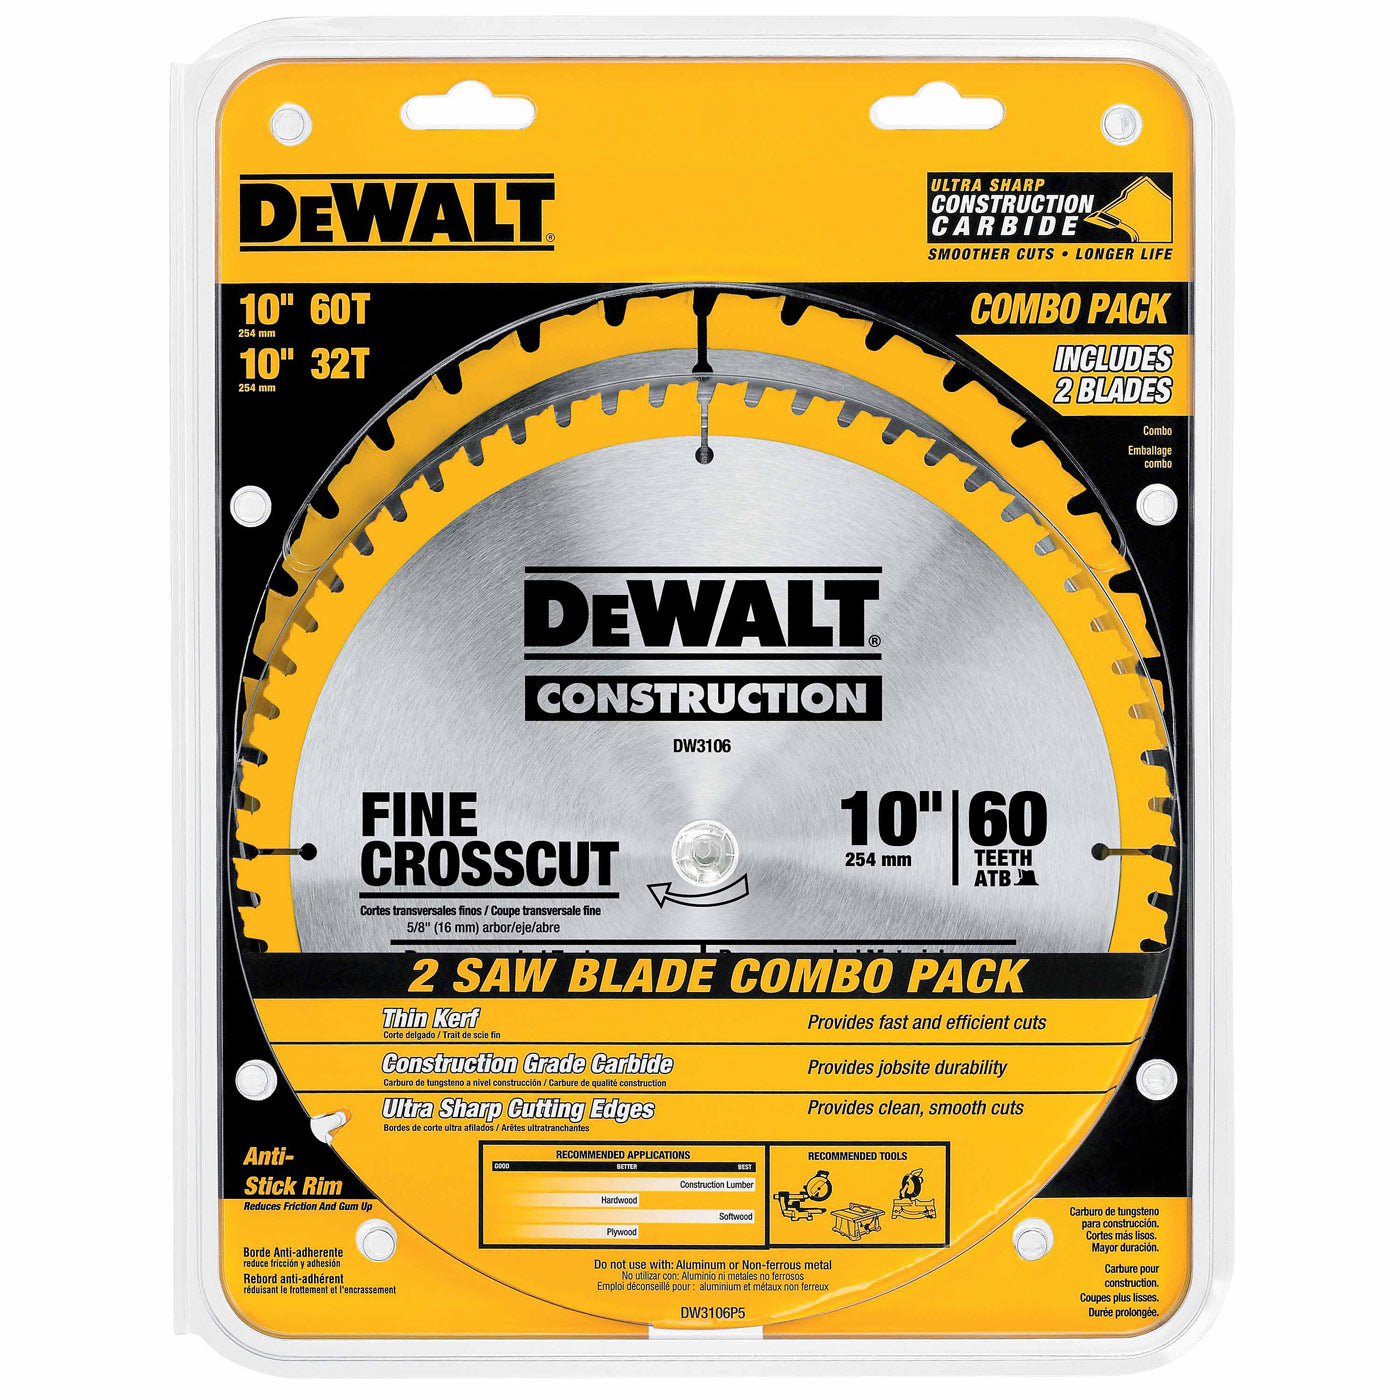 Hojas para sierra caladora - DeWALT (DW3770-5) — Home Store